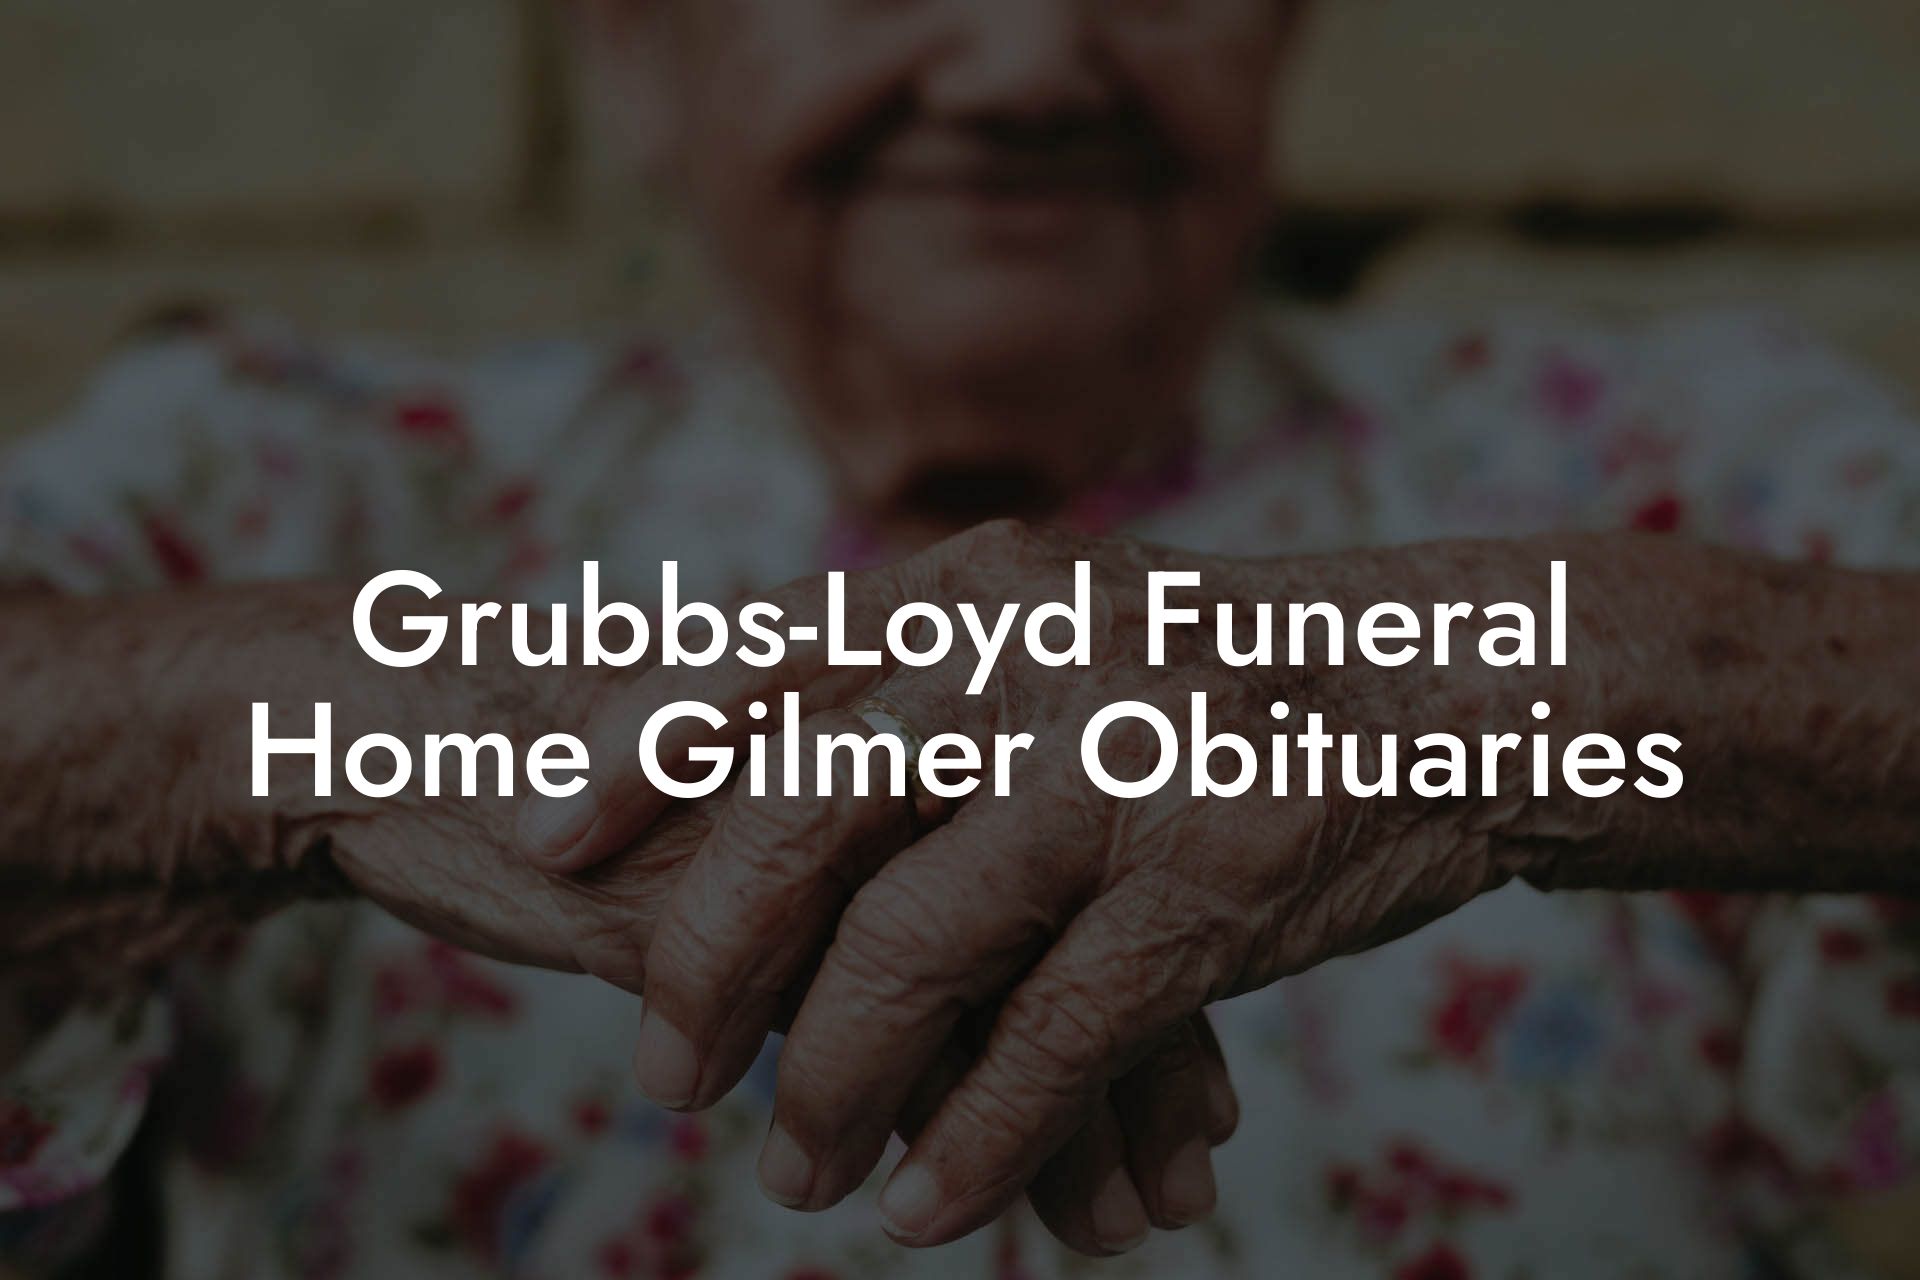 Grubbs-Loyd Funeral Home Gilmer Obituaries